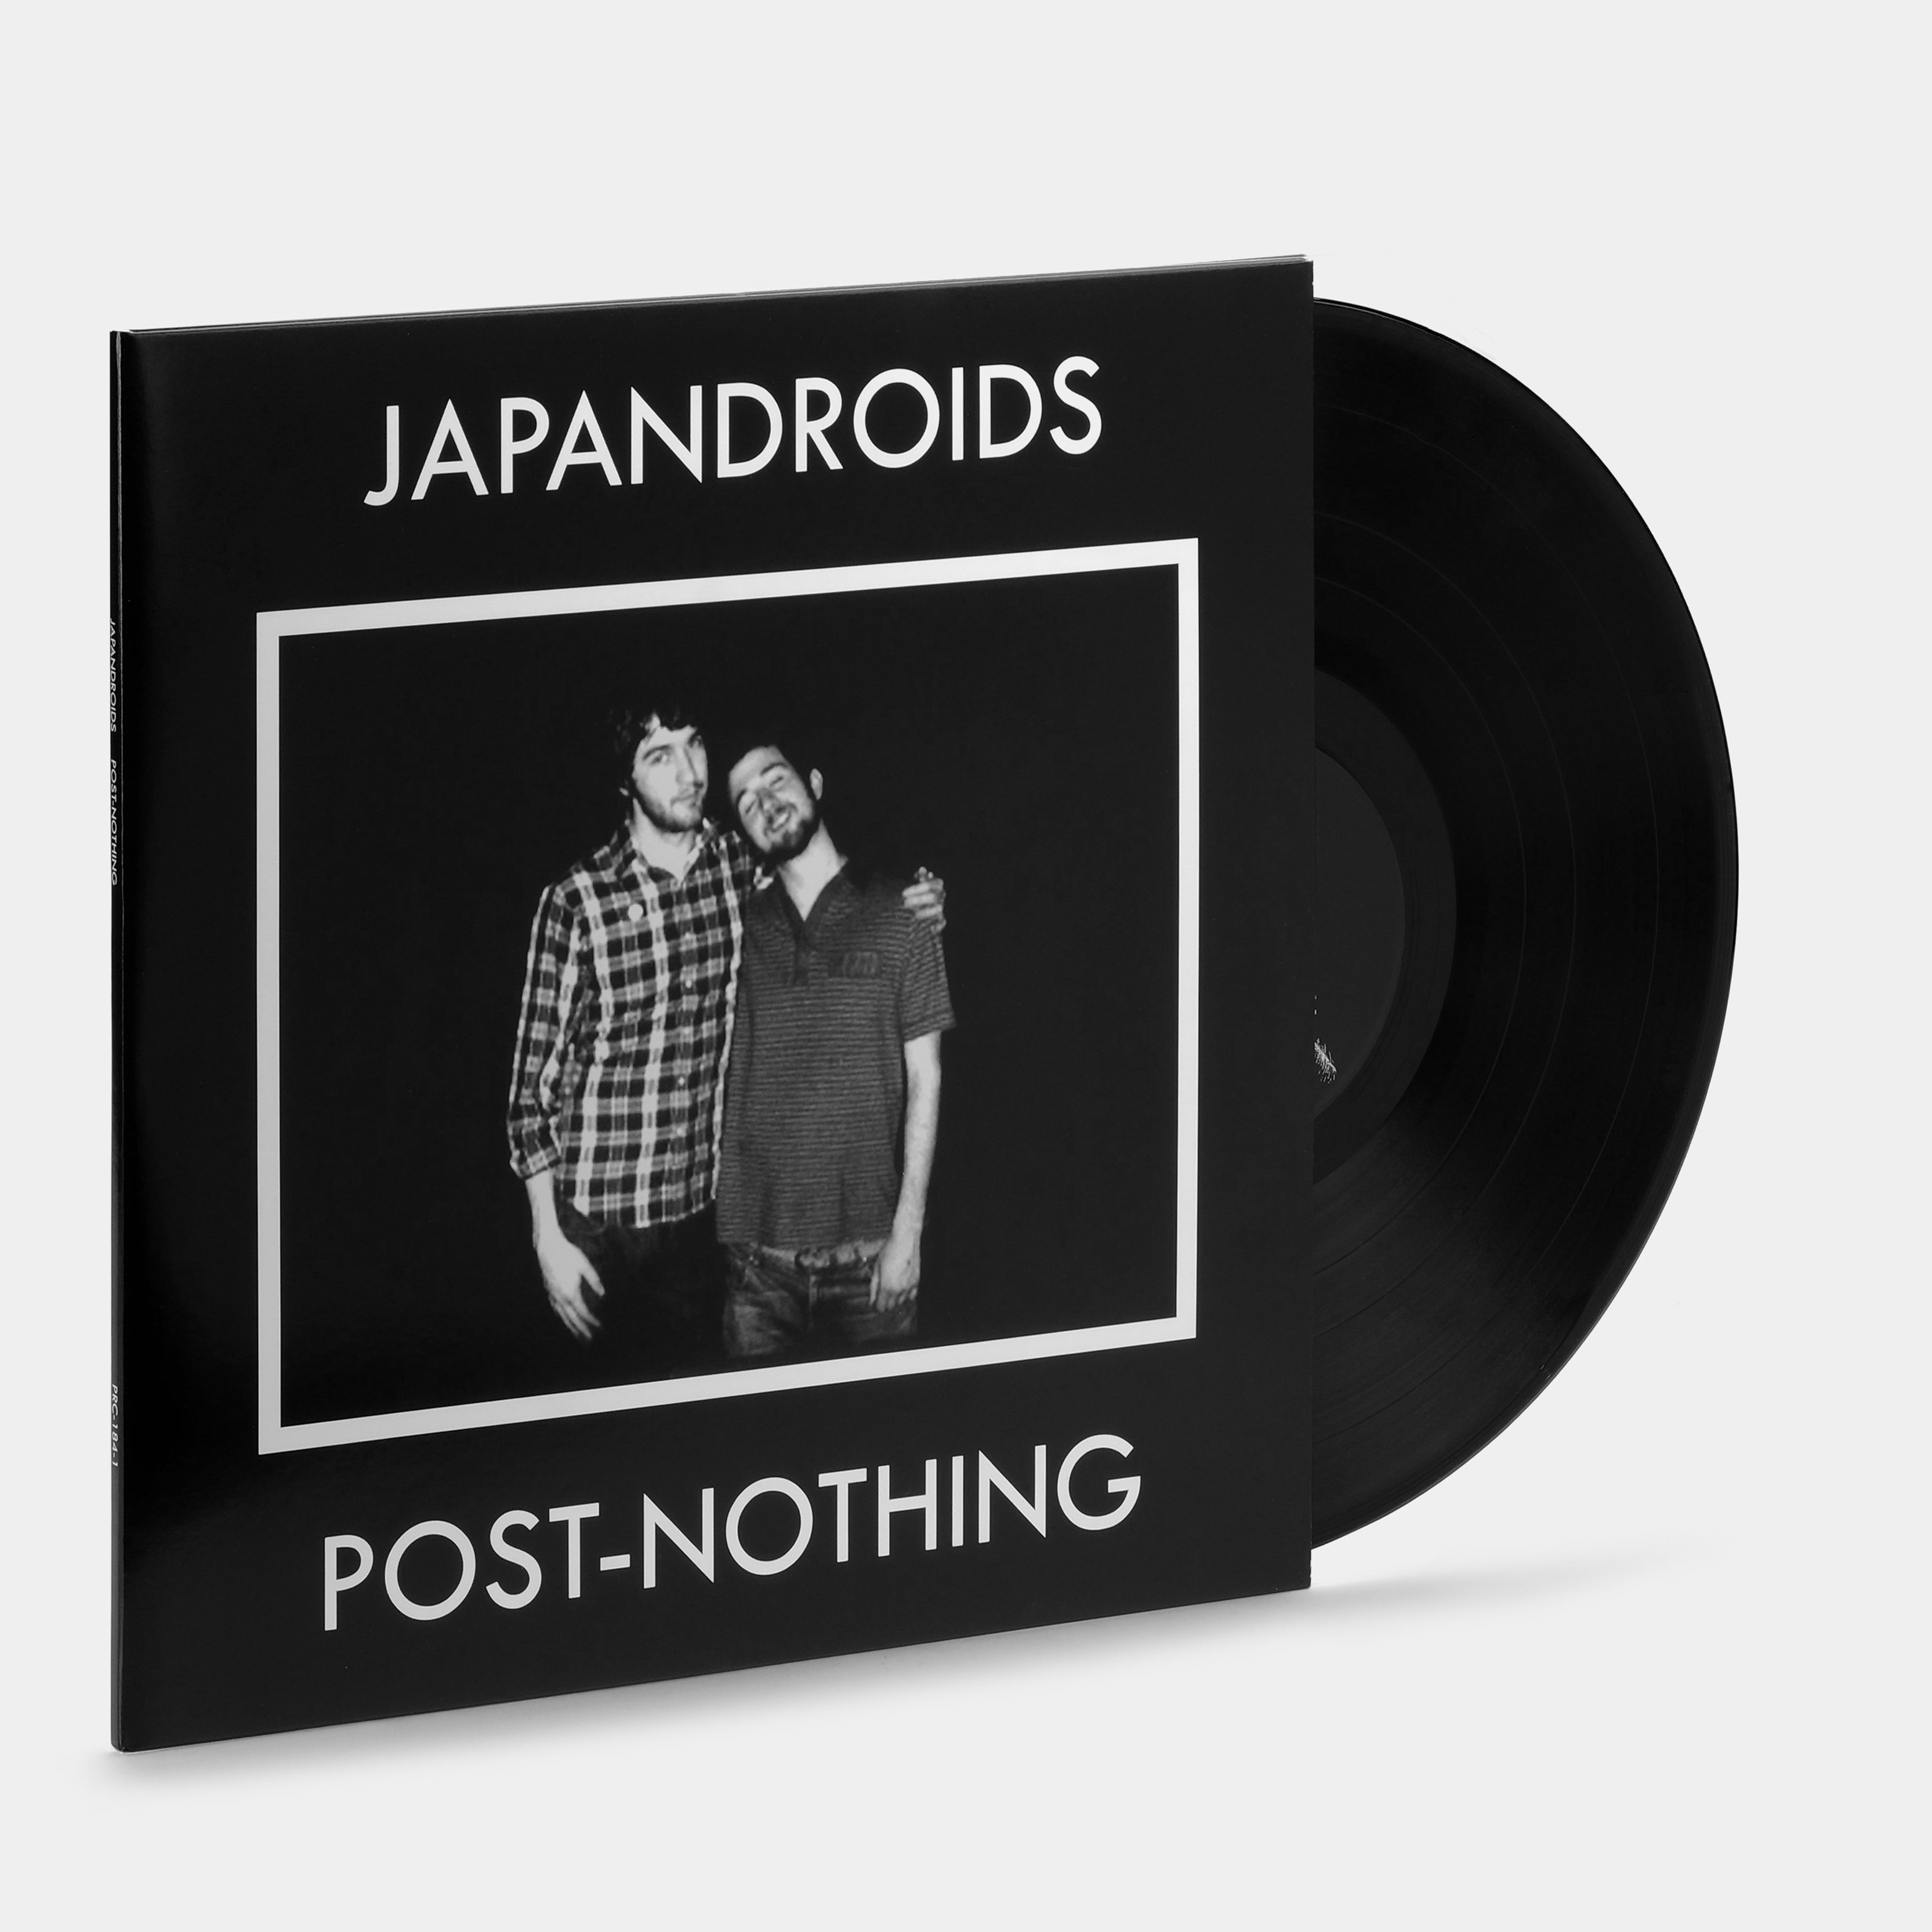 Japandroids - Post-Nothing LP Vinyl Record